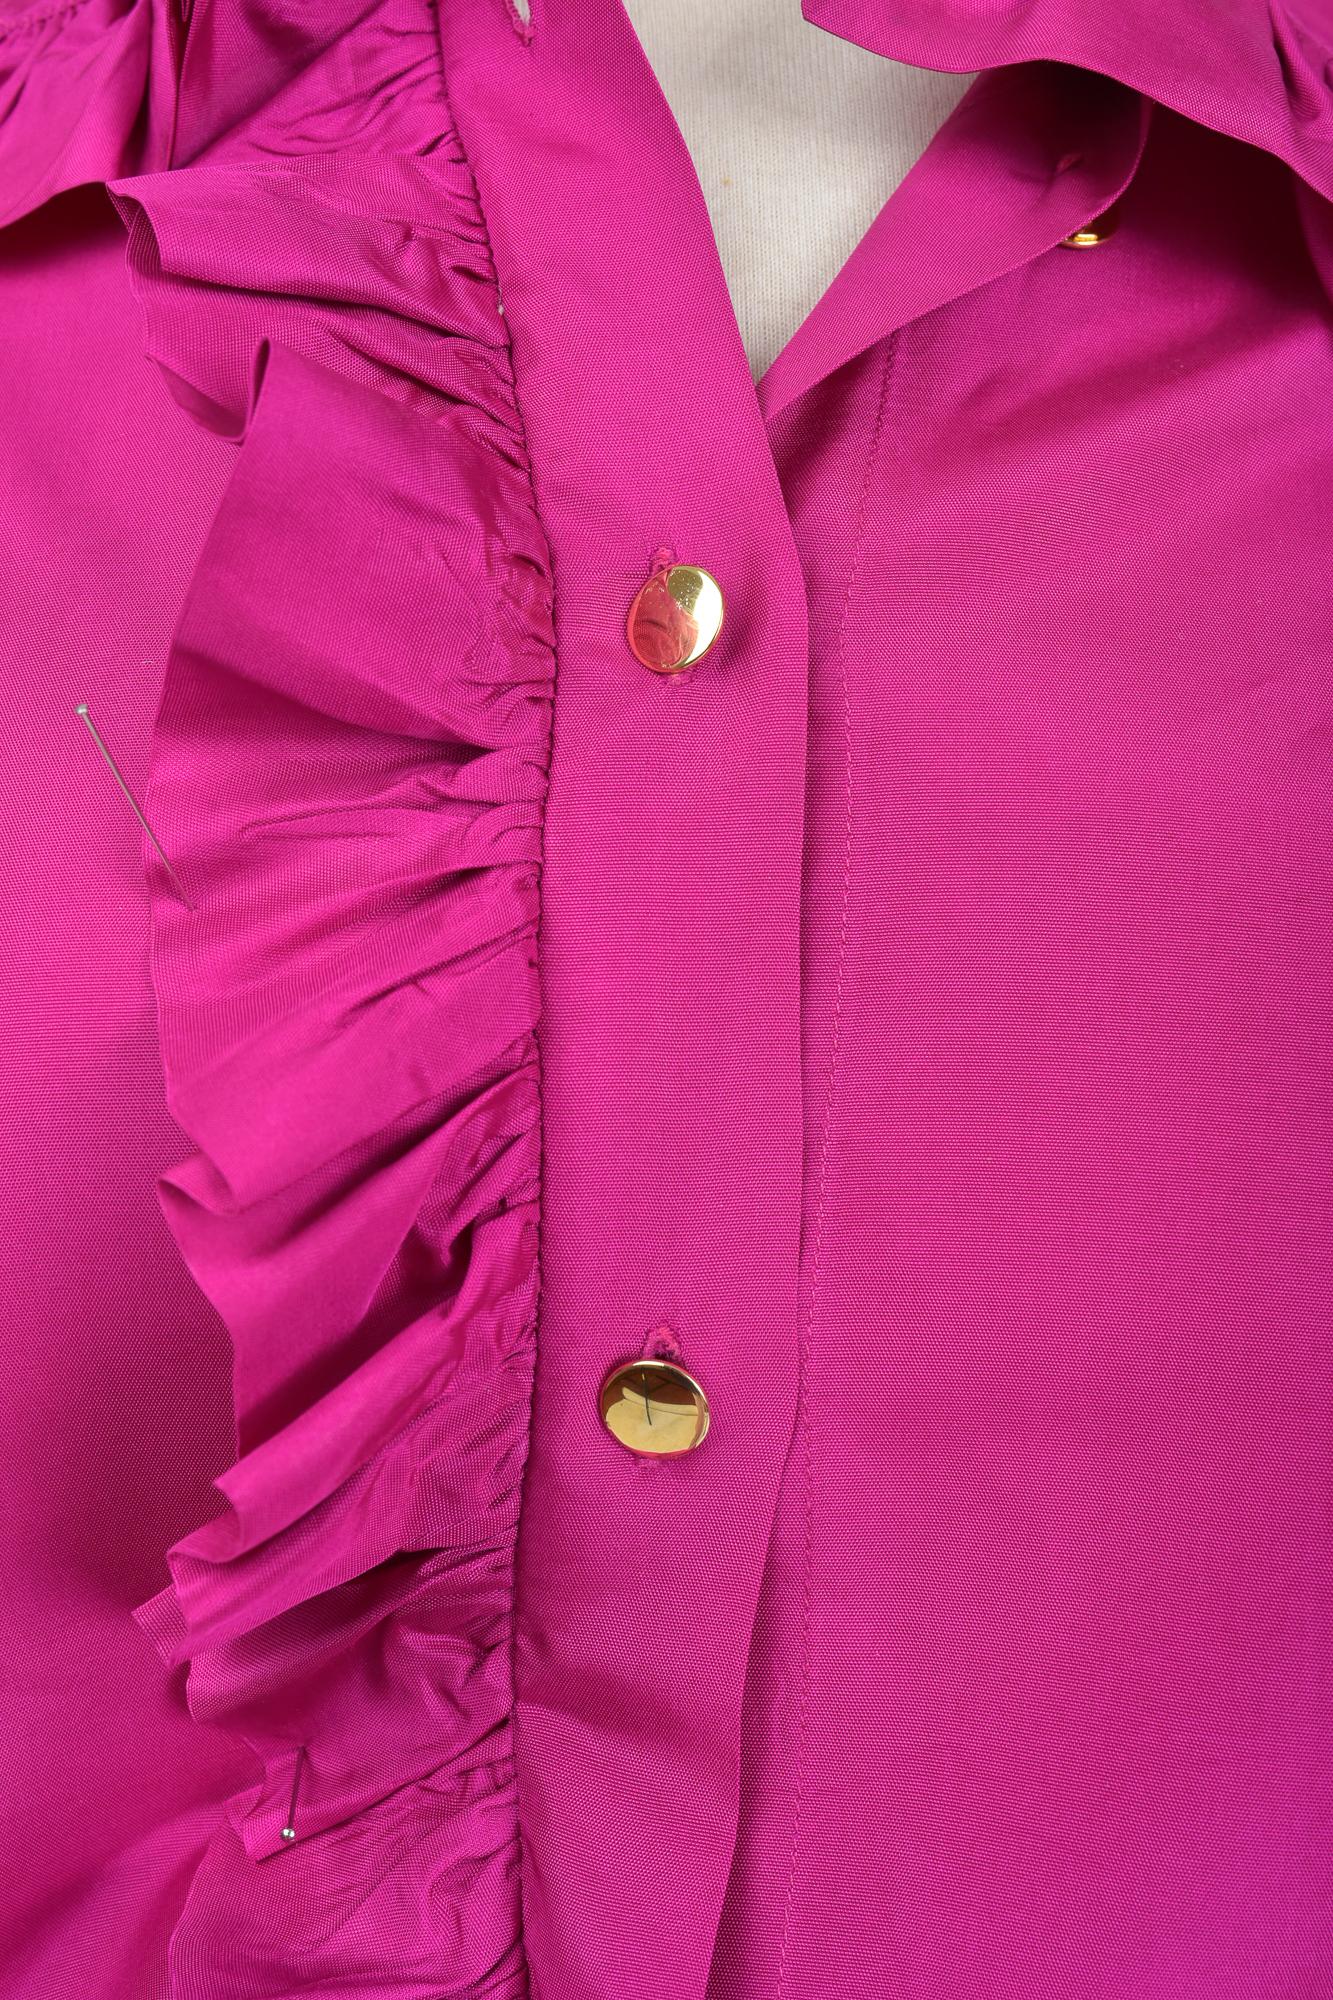 A French Fuschia Taffeta Blouse and skirt By Popy Moreni Paris Circa 1990 For Sale 3